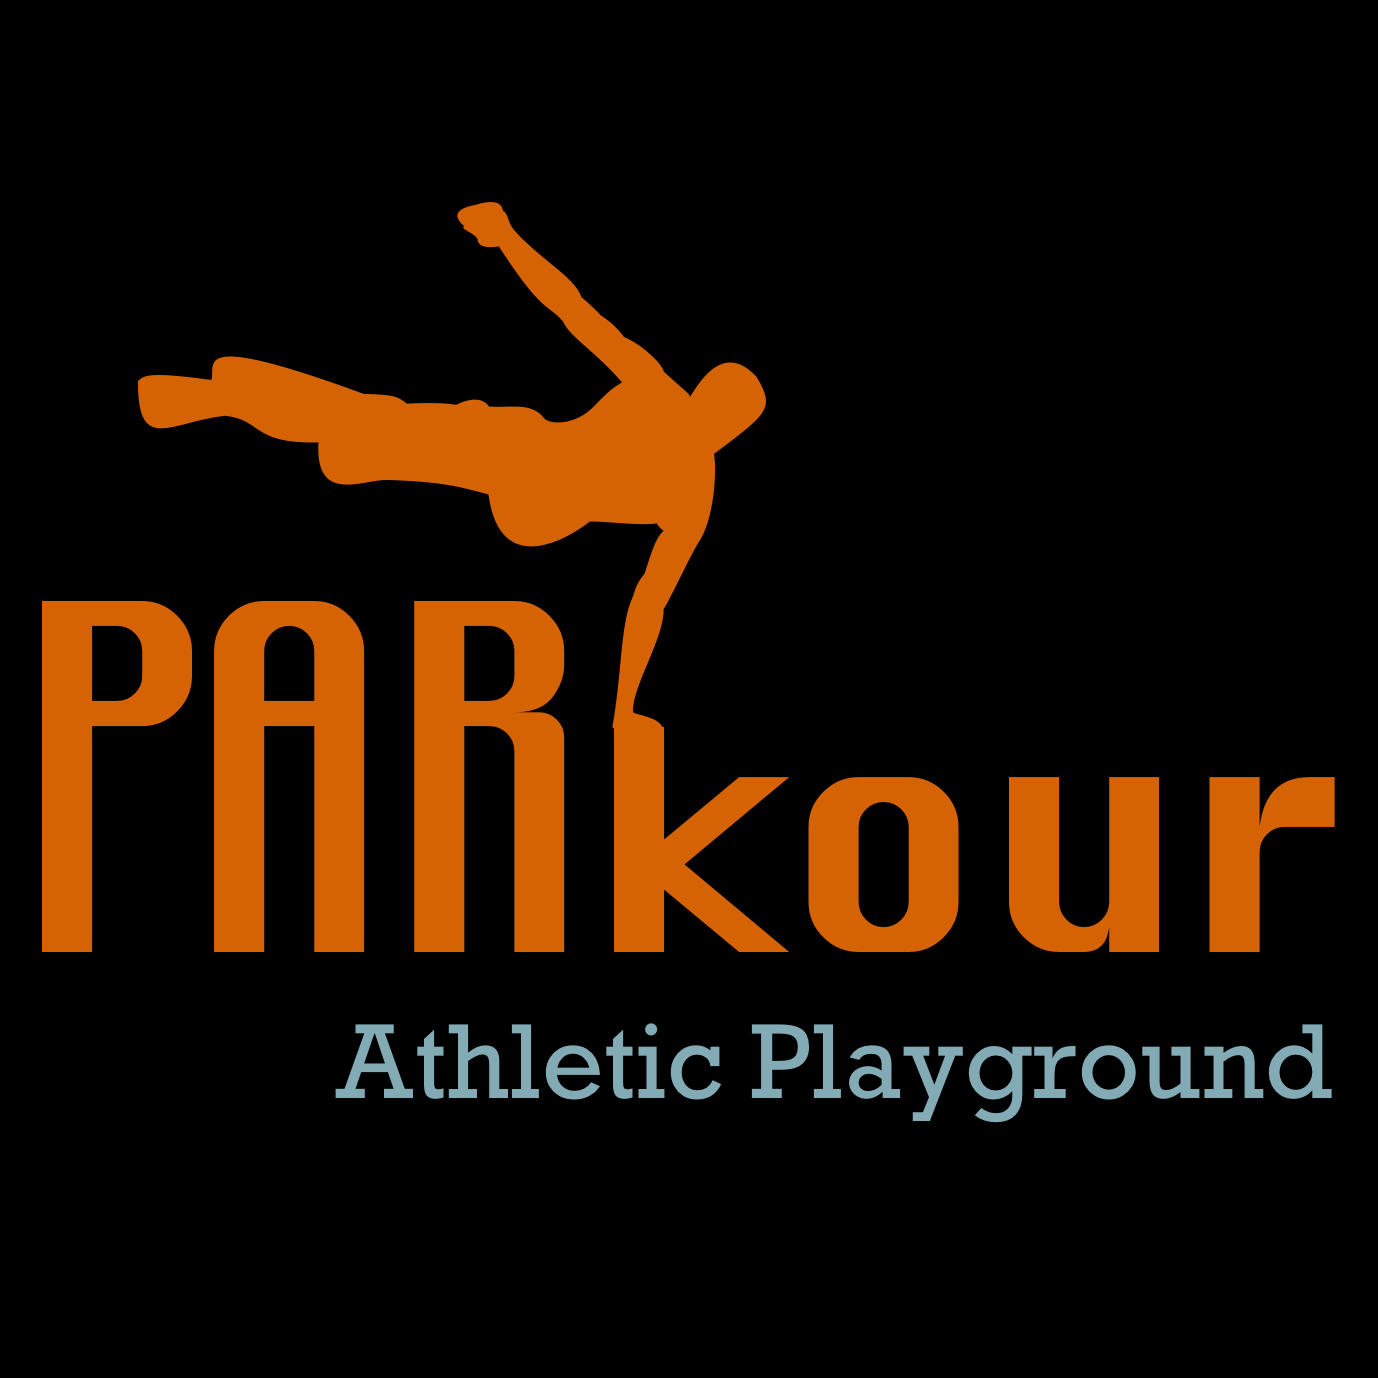 Parkour Athletic Playground logo